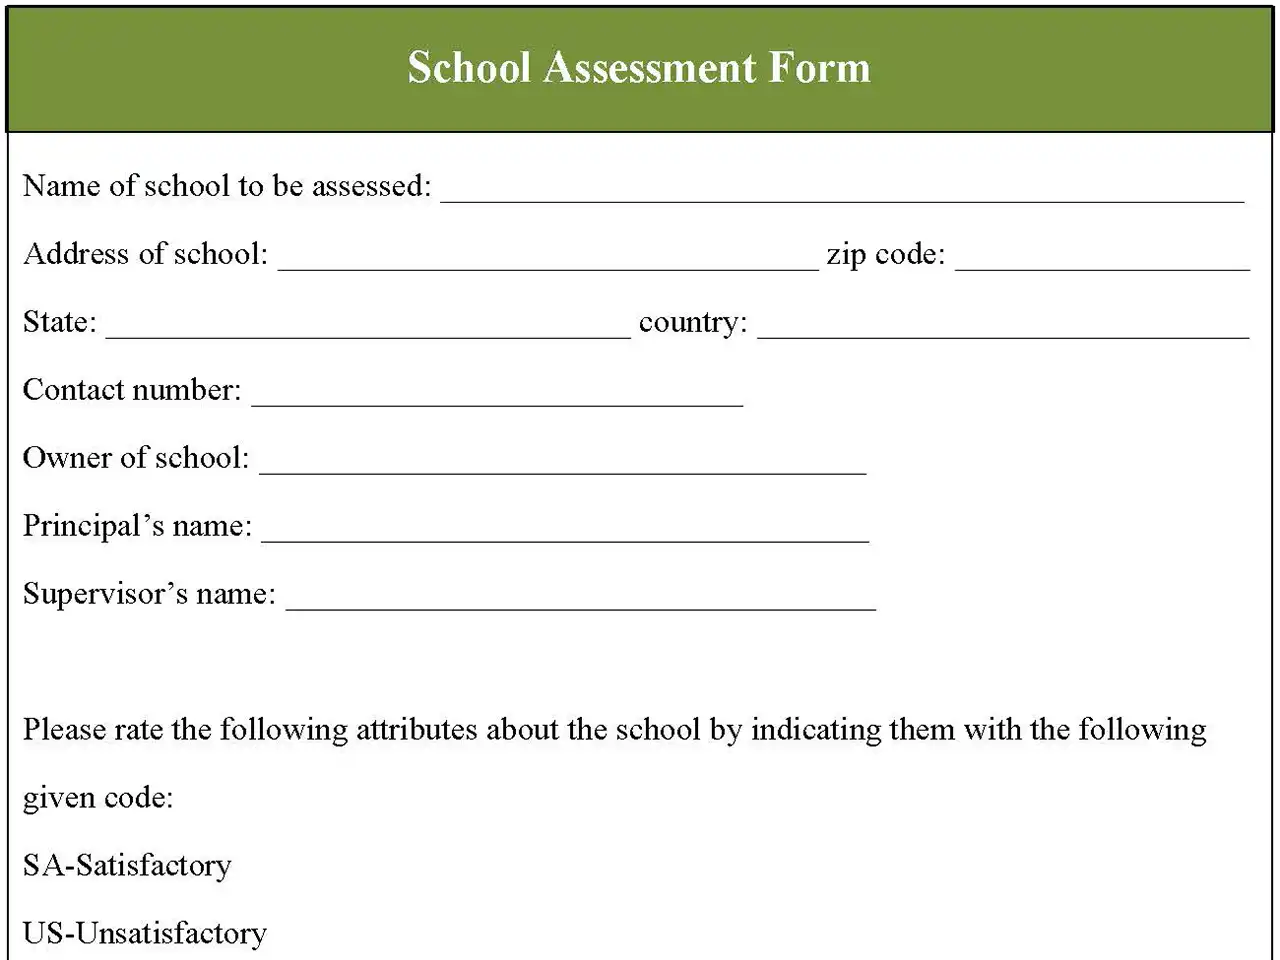 School Assessment Form